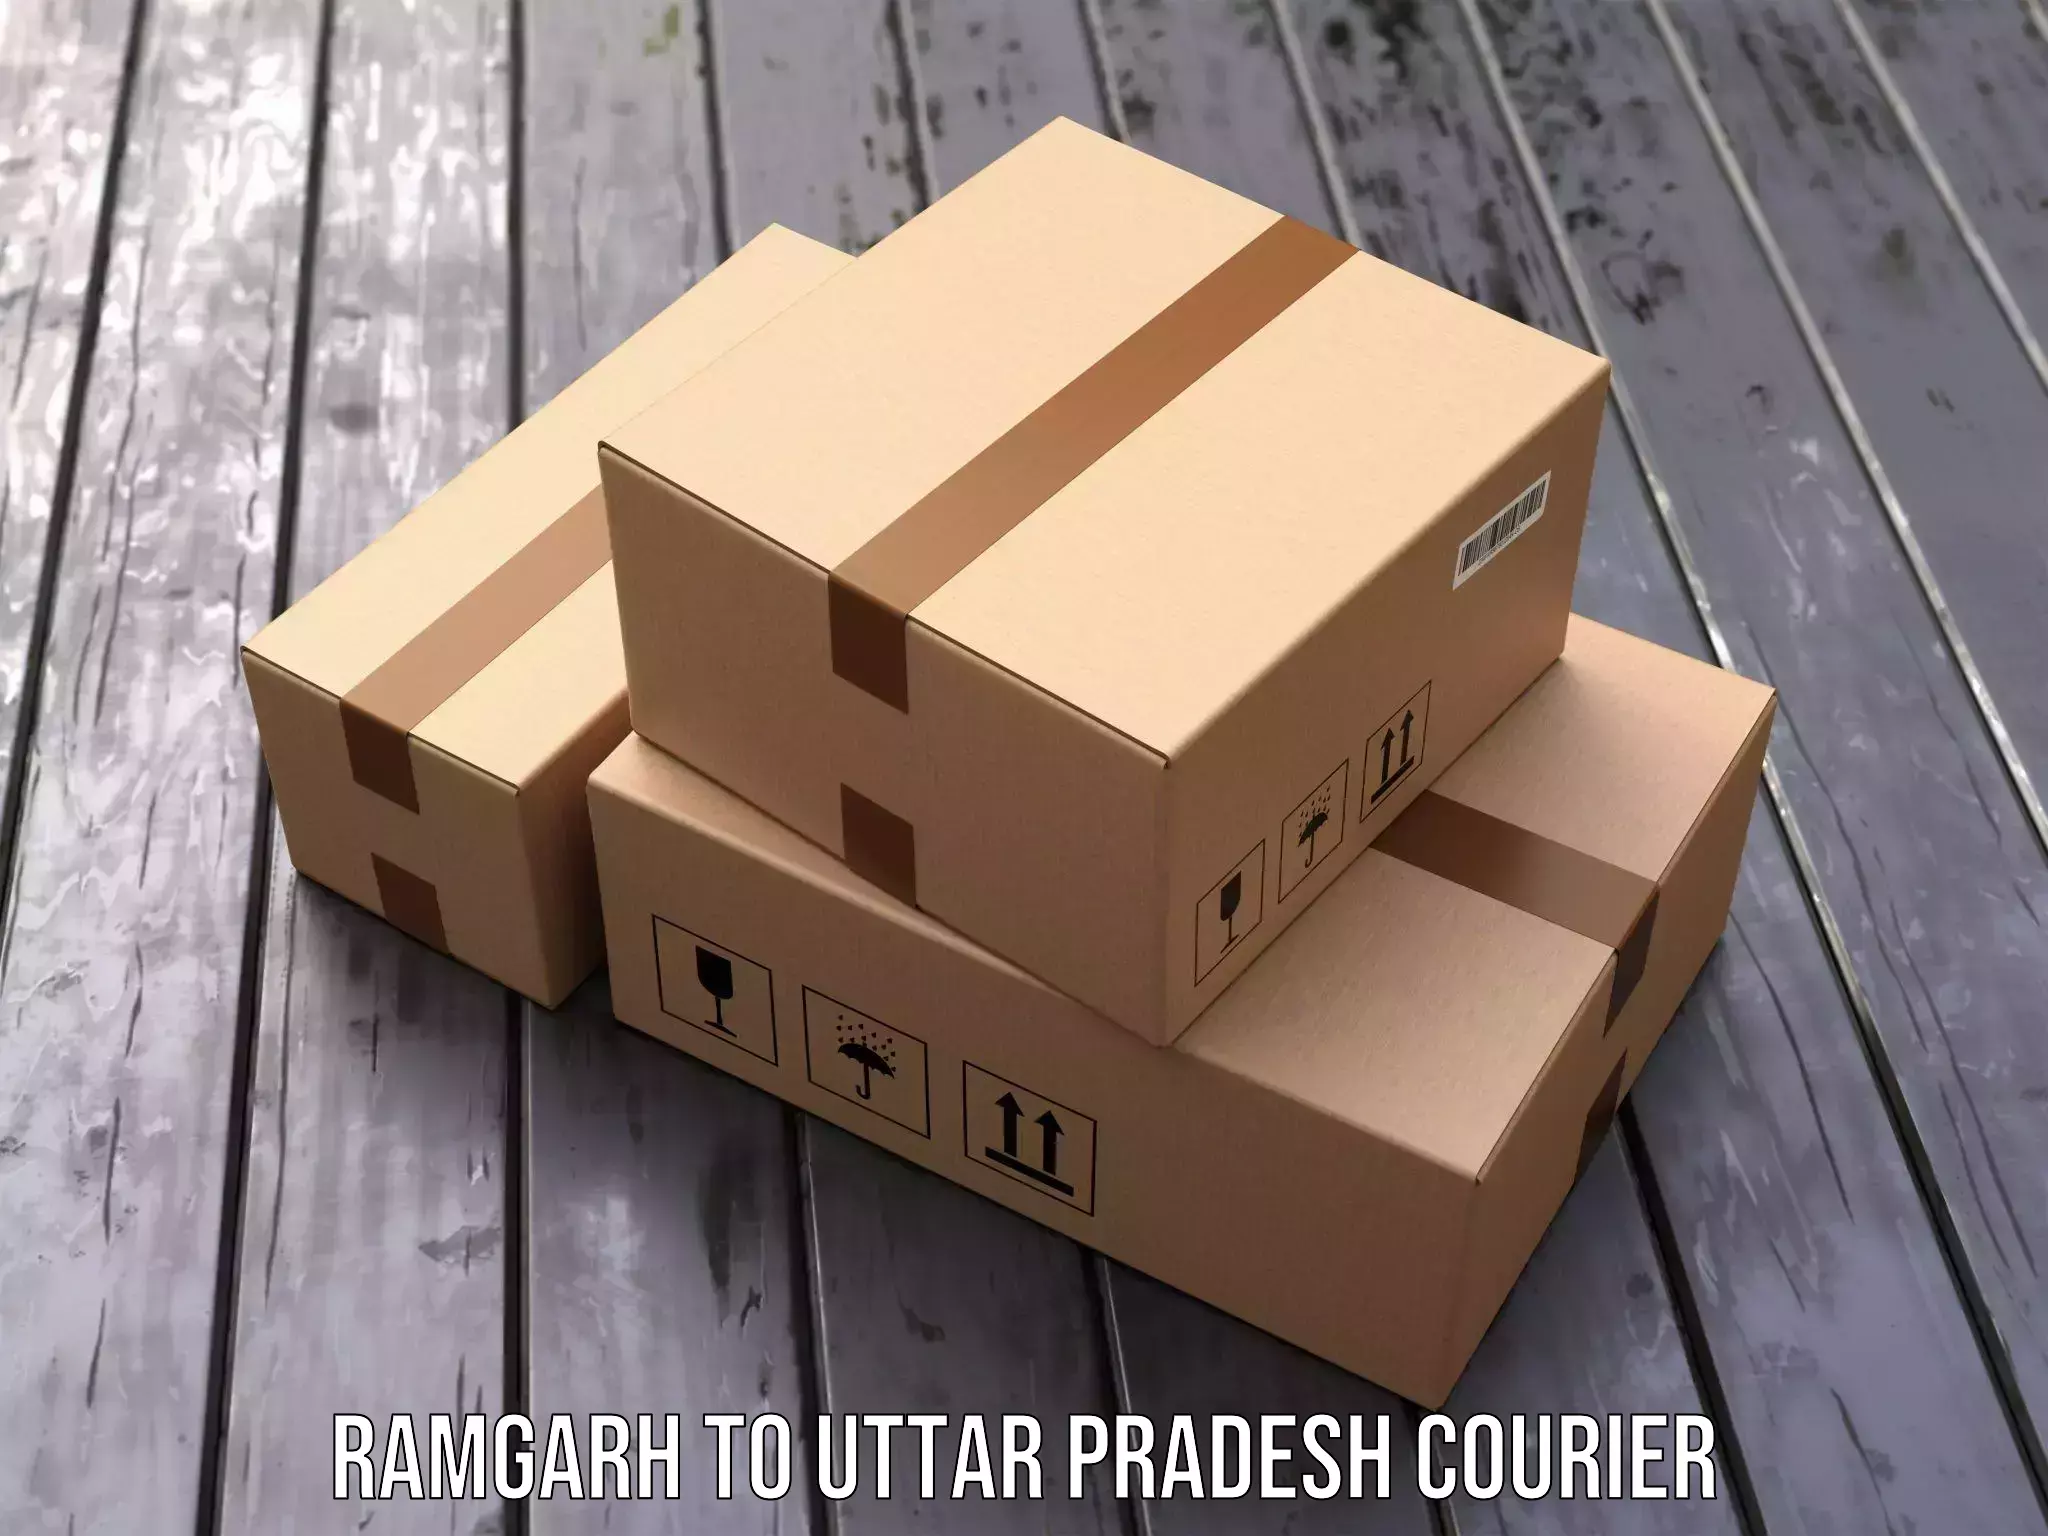 High-capacity parcel service Ramgarh to Dhaurahara